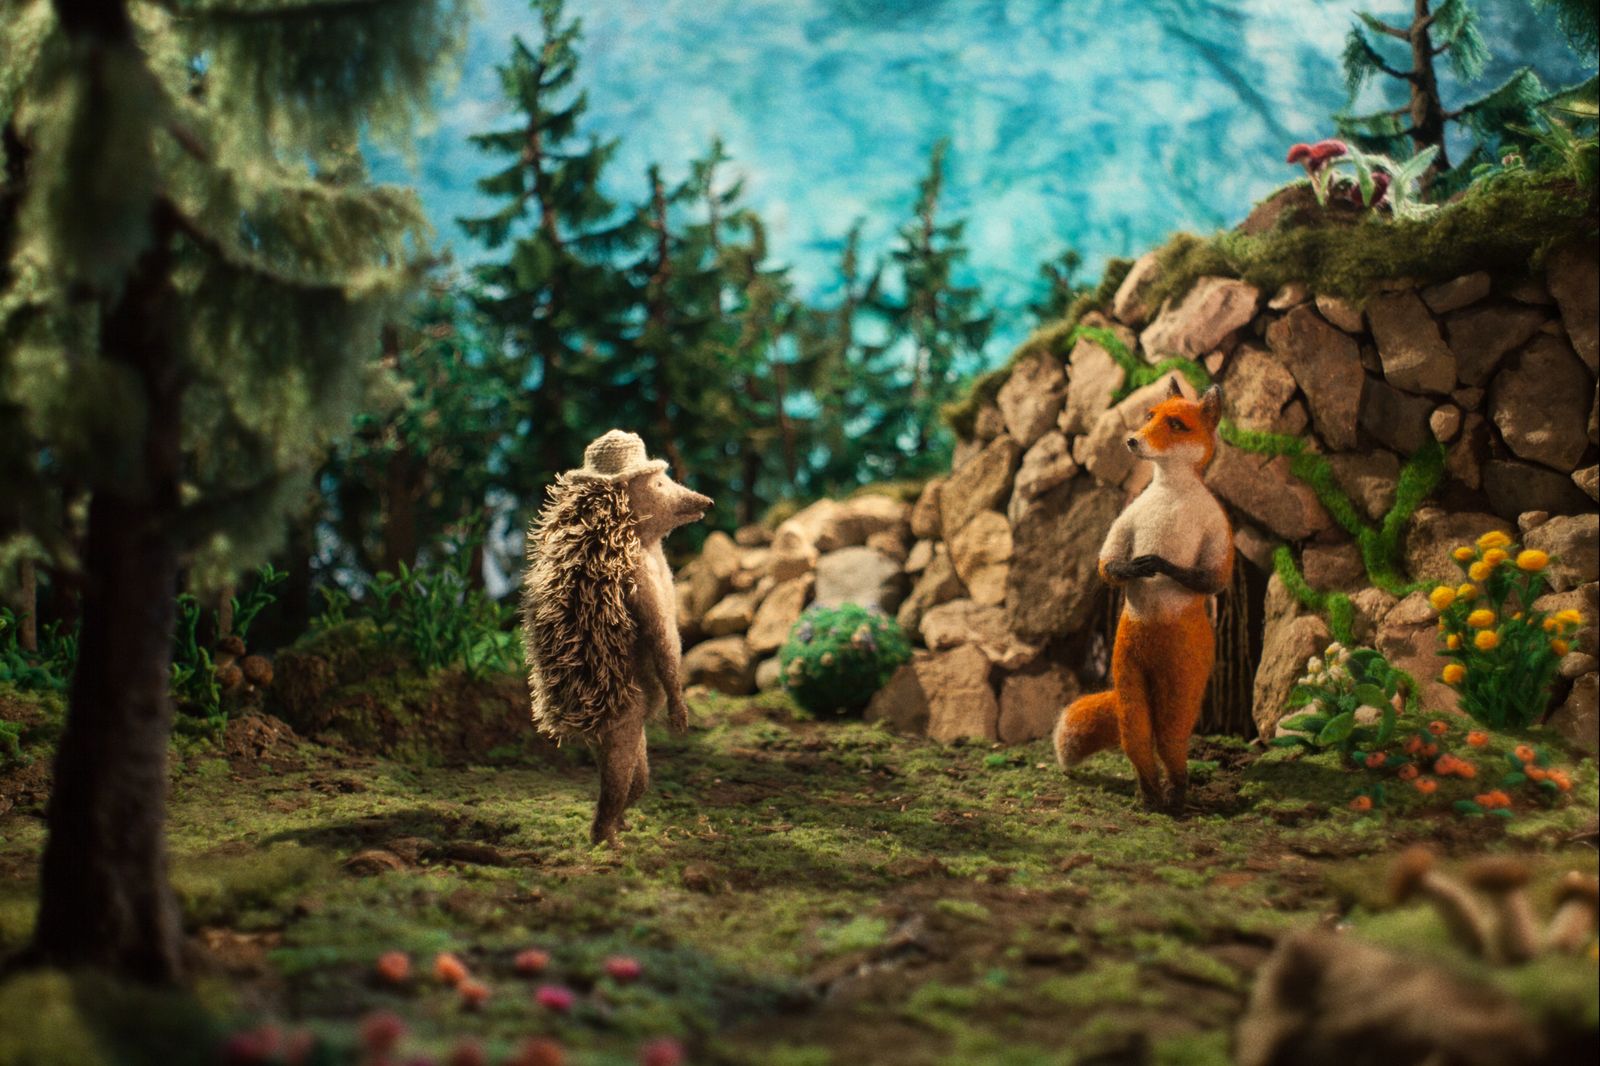 Hedgehog’s Home to Premiere at Berlin International Film Festival